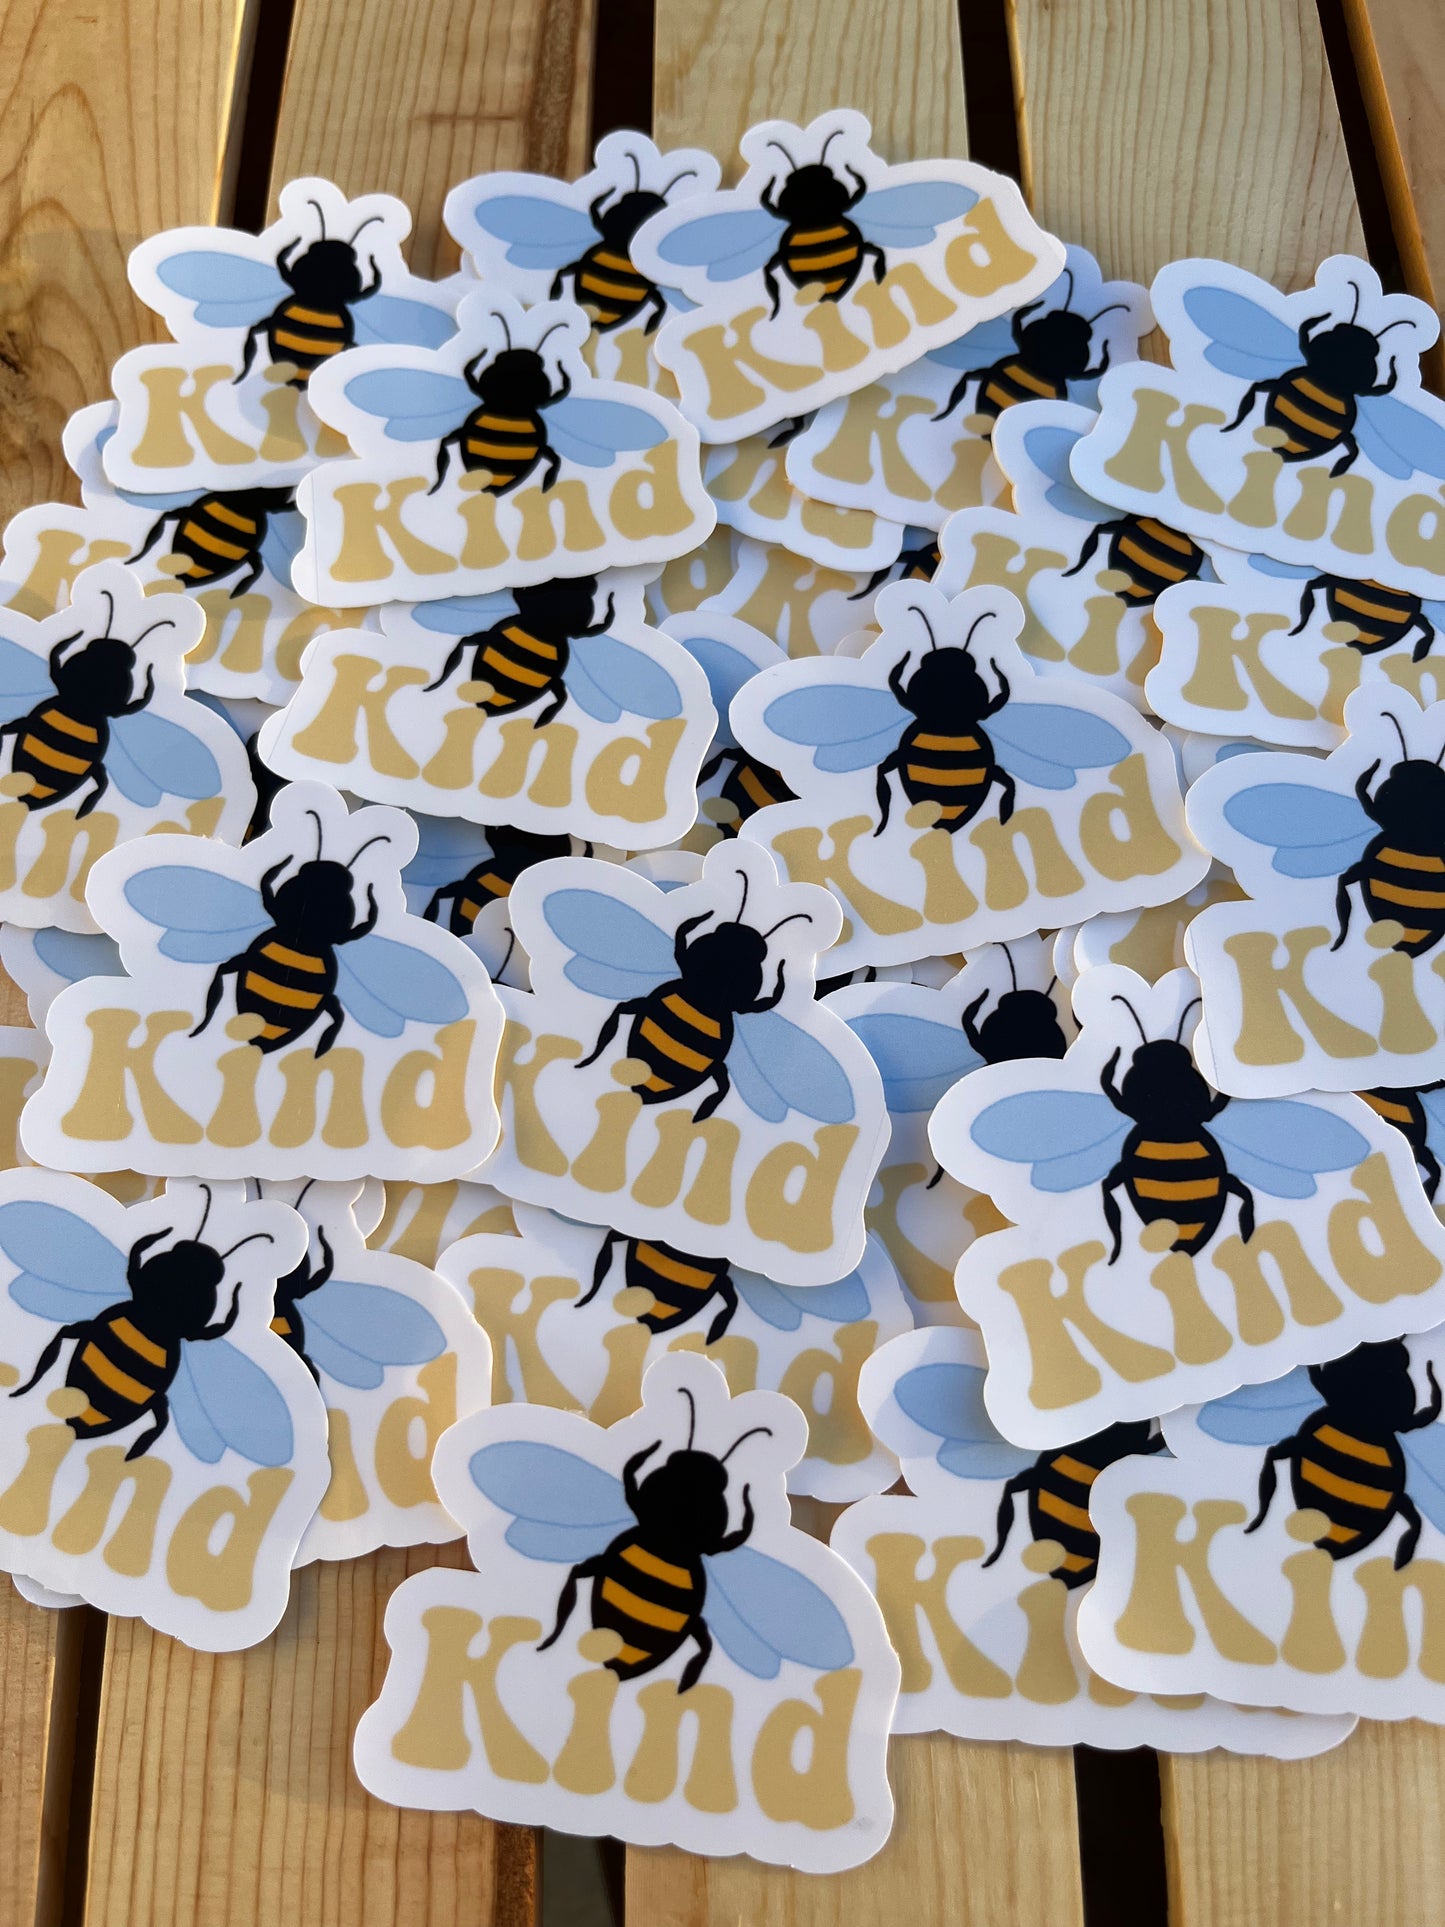 Bee kind sticker